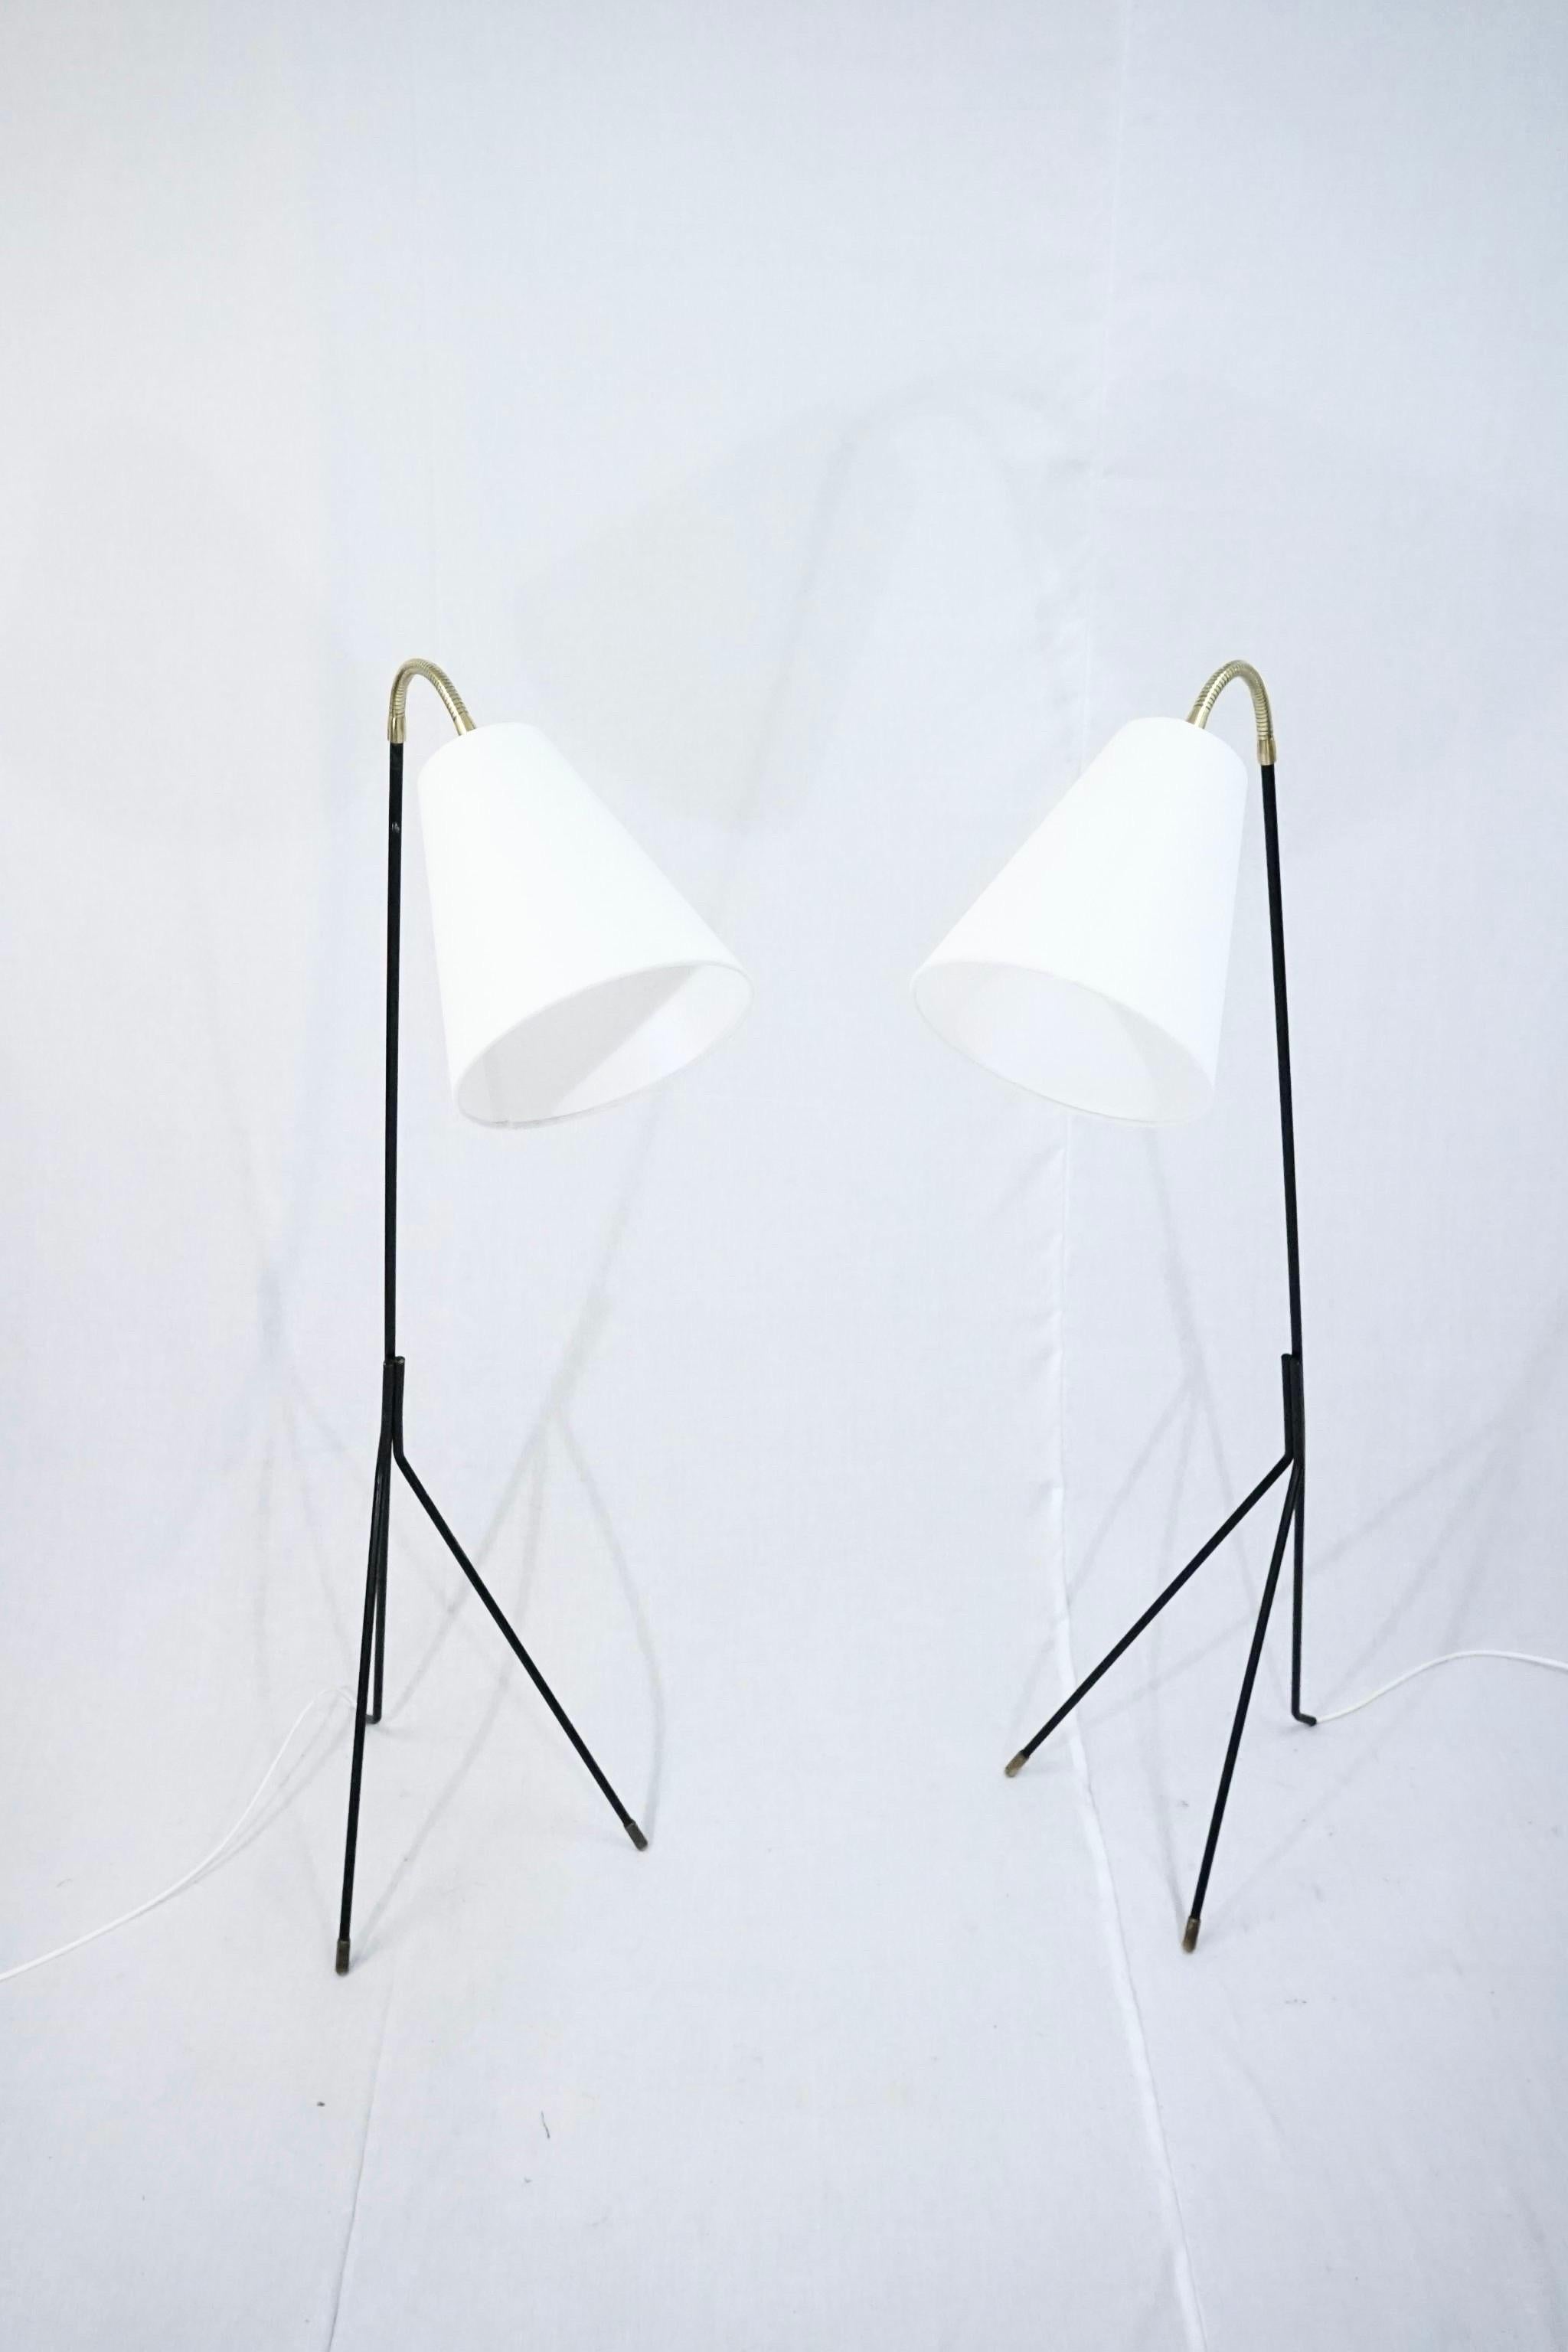 Danish Set of Two Svend Aage Holm Sørensen Grasshopper Floor Lamps